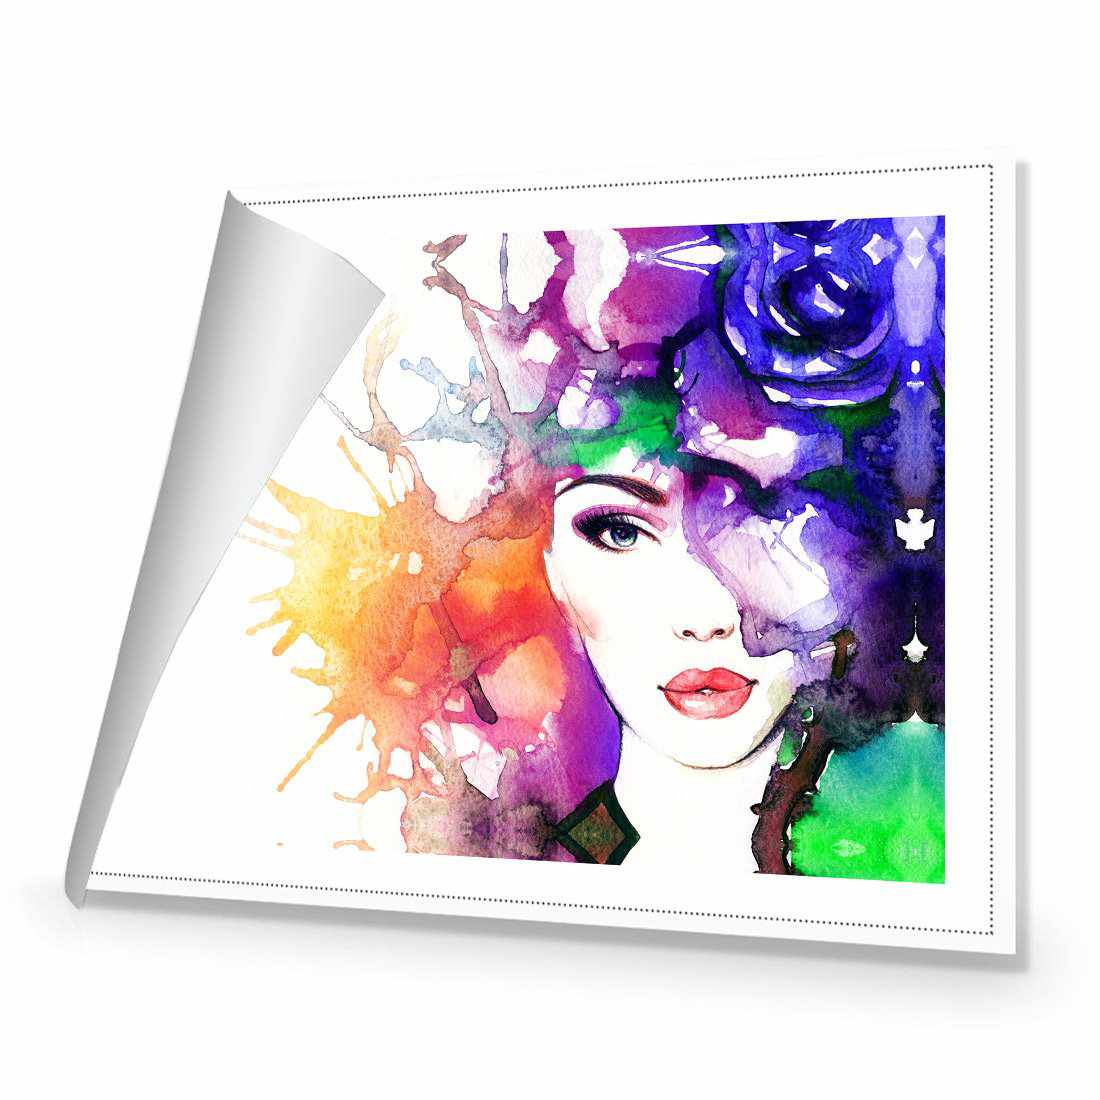 Mystic Rose Woman 2 Canvas Art-Canvas-Wall Art Designs-45x30cm-Rolled Canvas-Wall Art Designs